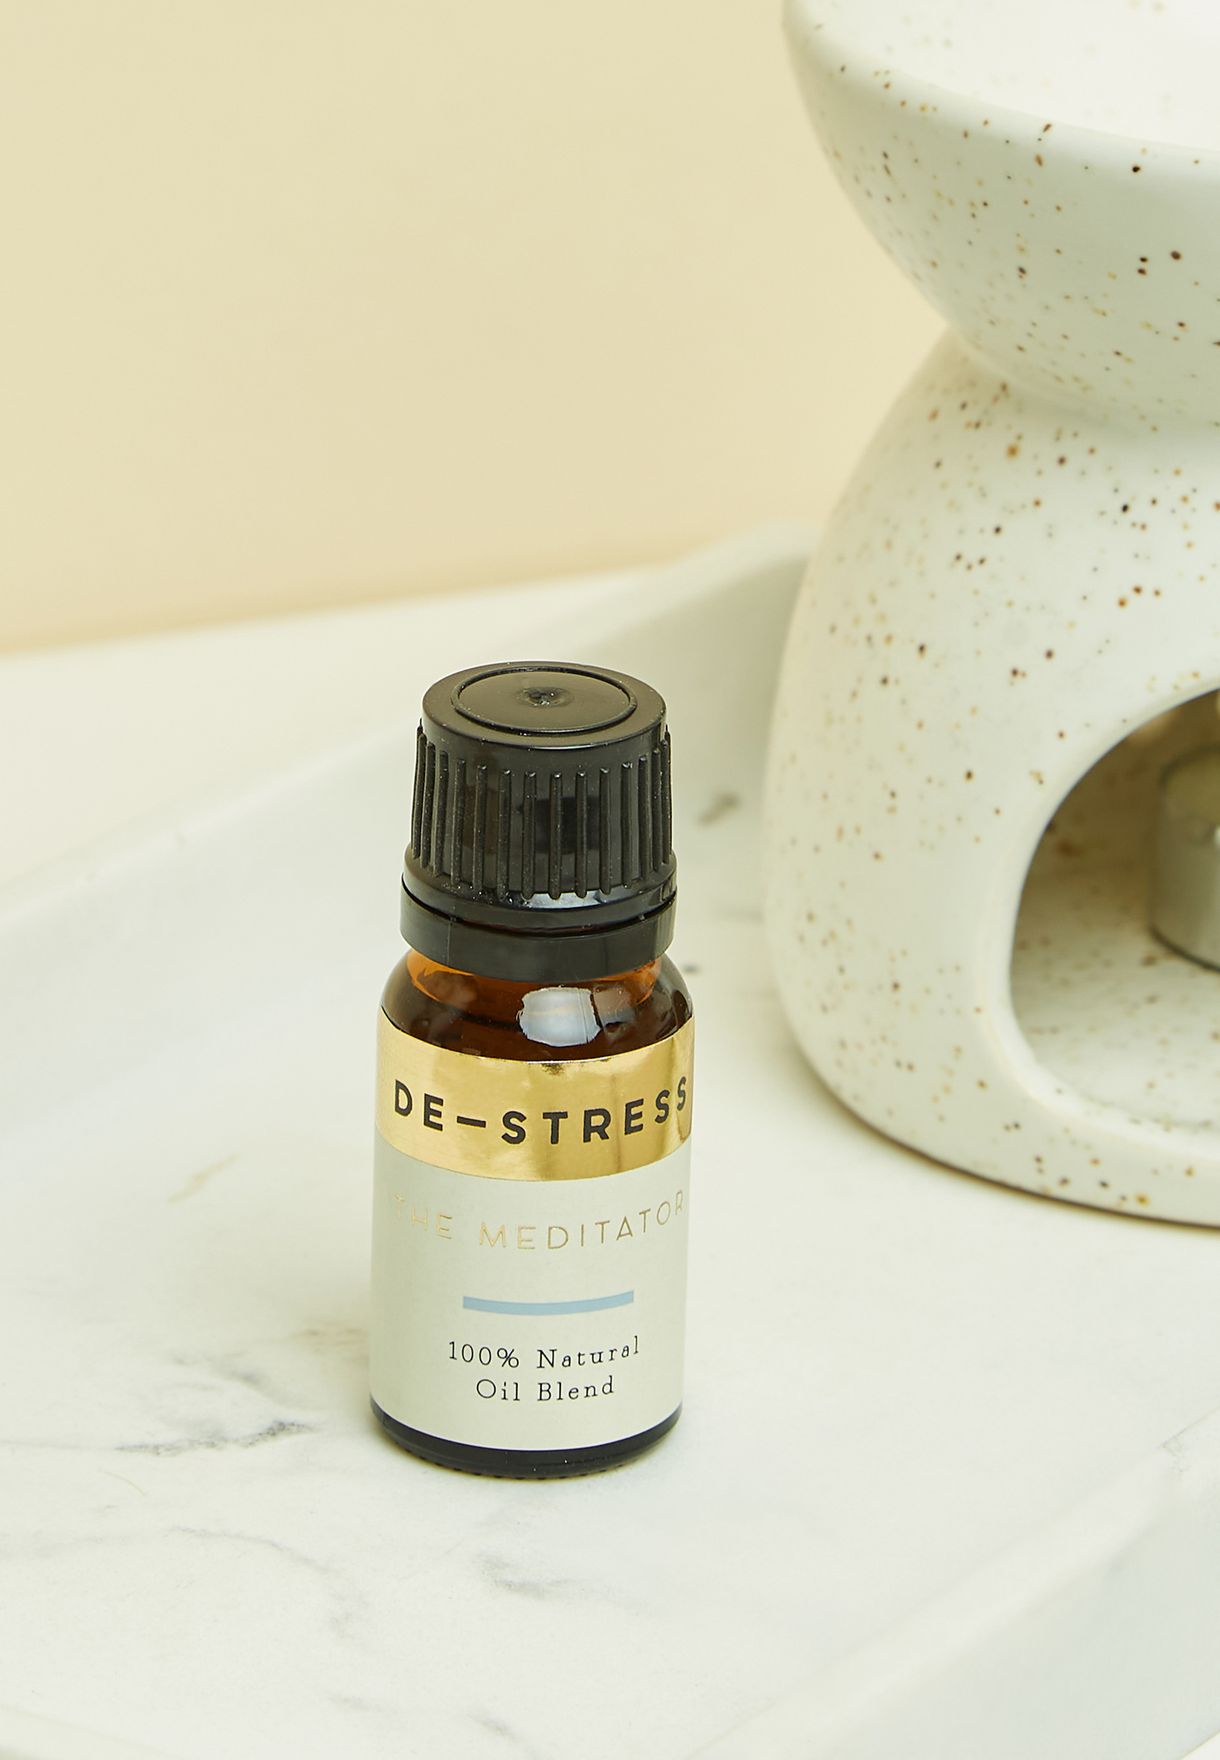 The Meditator Aromatherapy Fragrance Oil